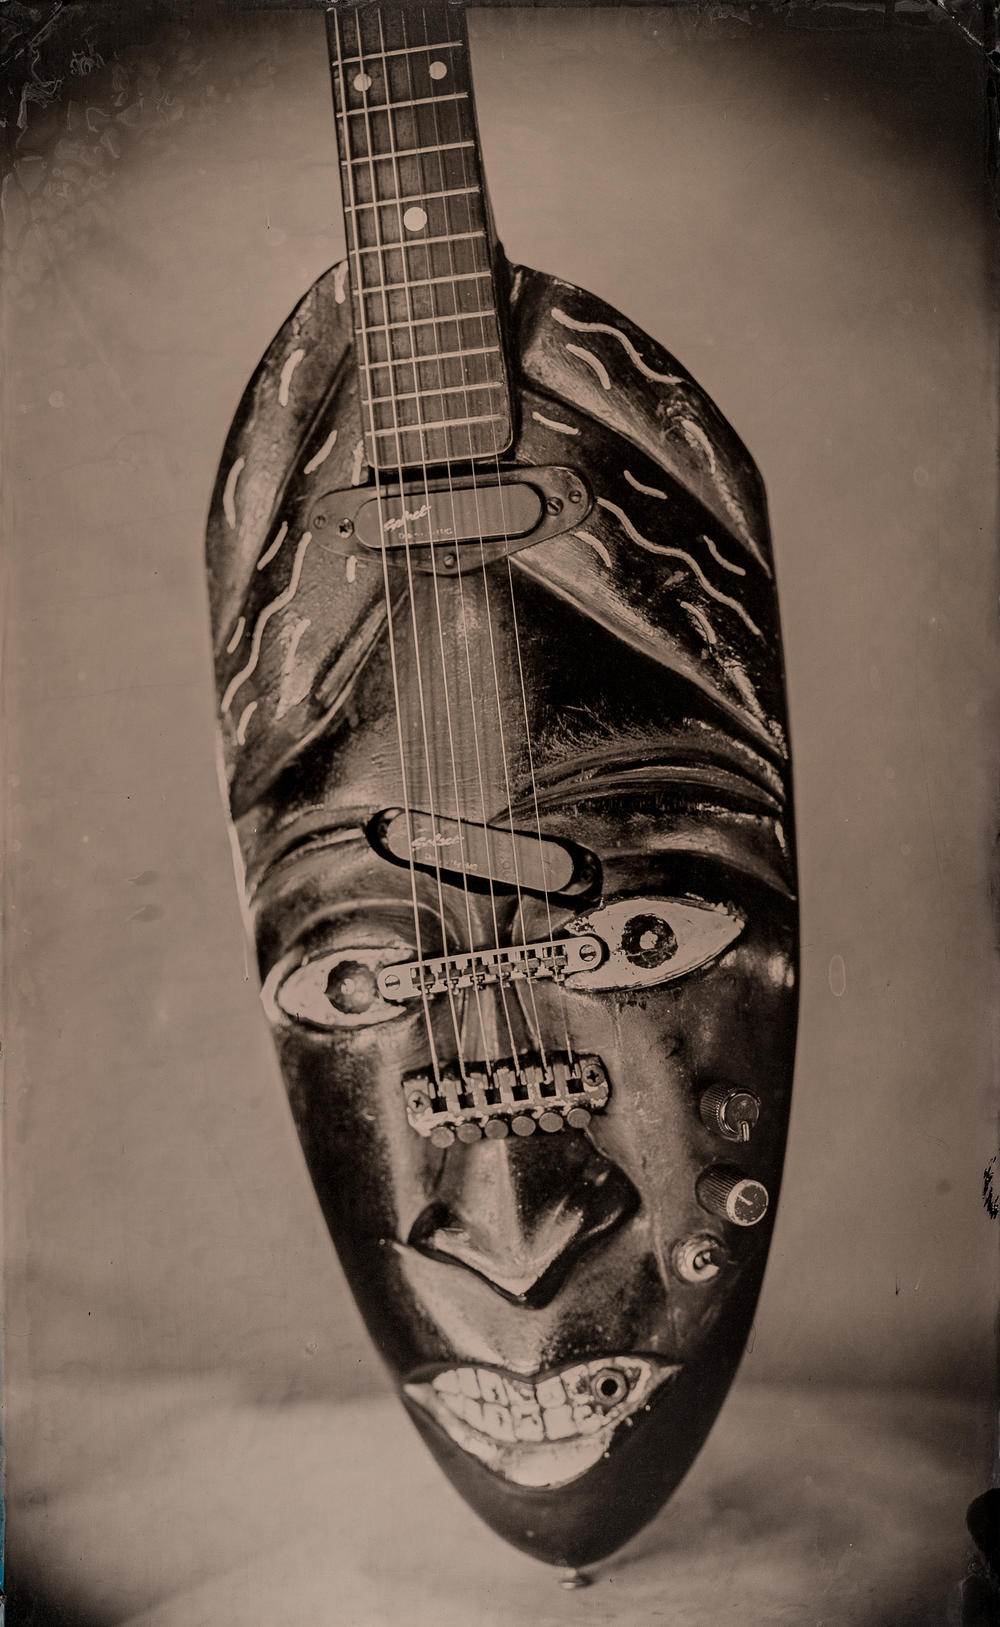 Freeman Vines' Death Mask guitar.